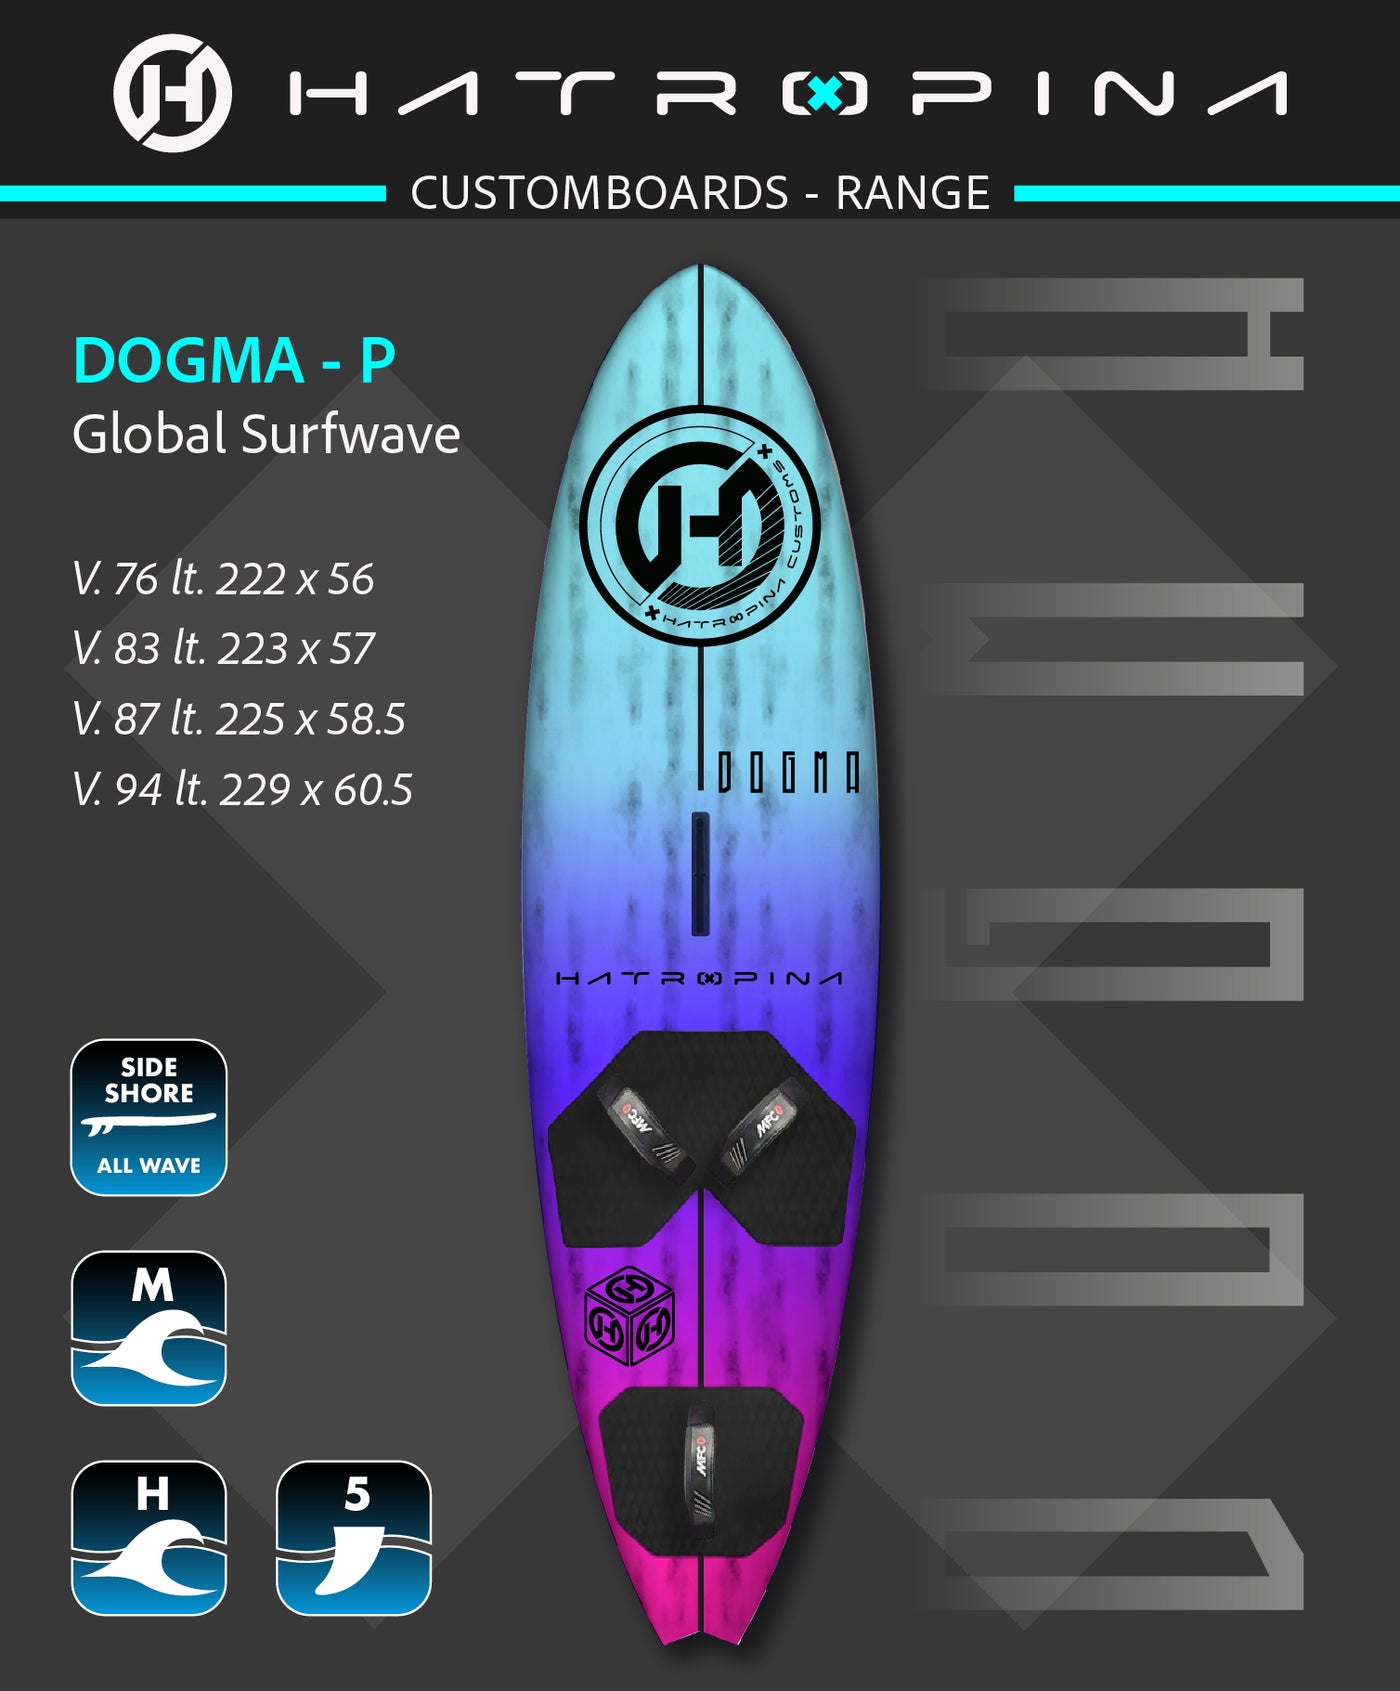 Hatropina Custom Board "DOGMA WAVE 76" Quad